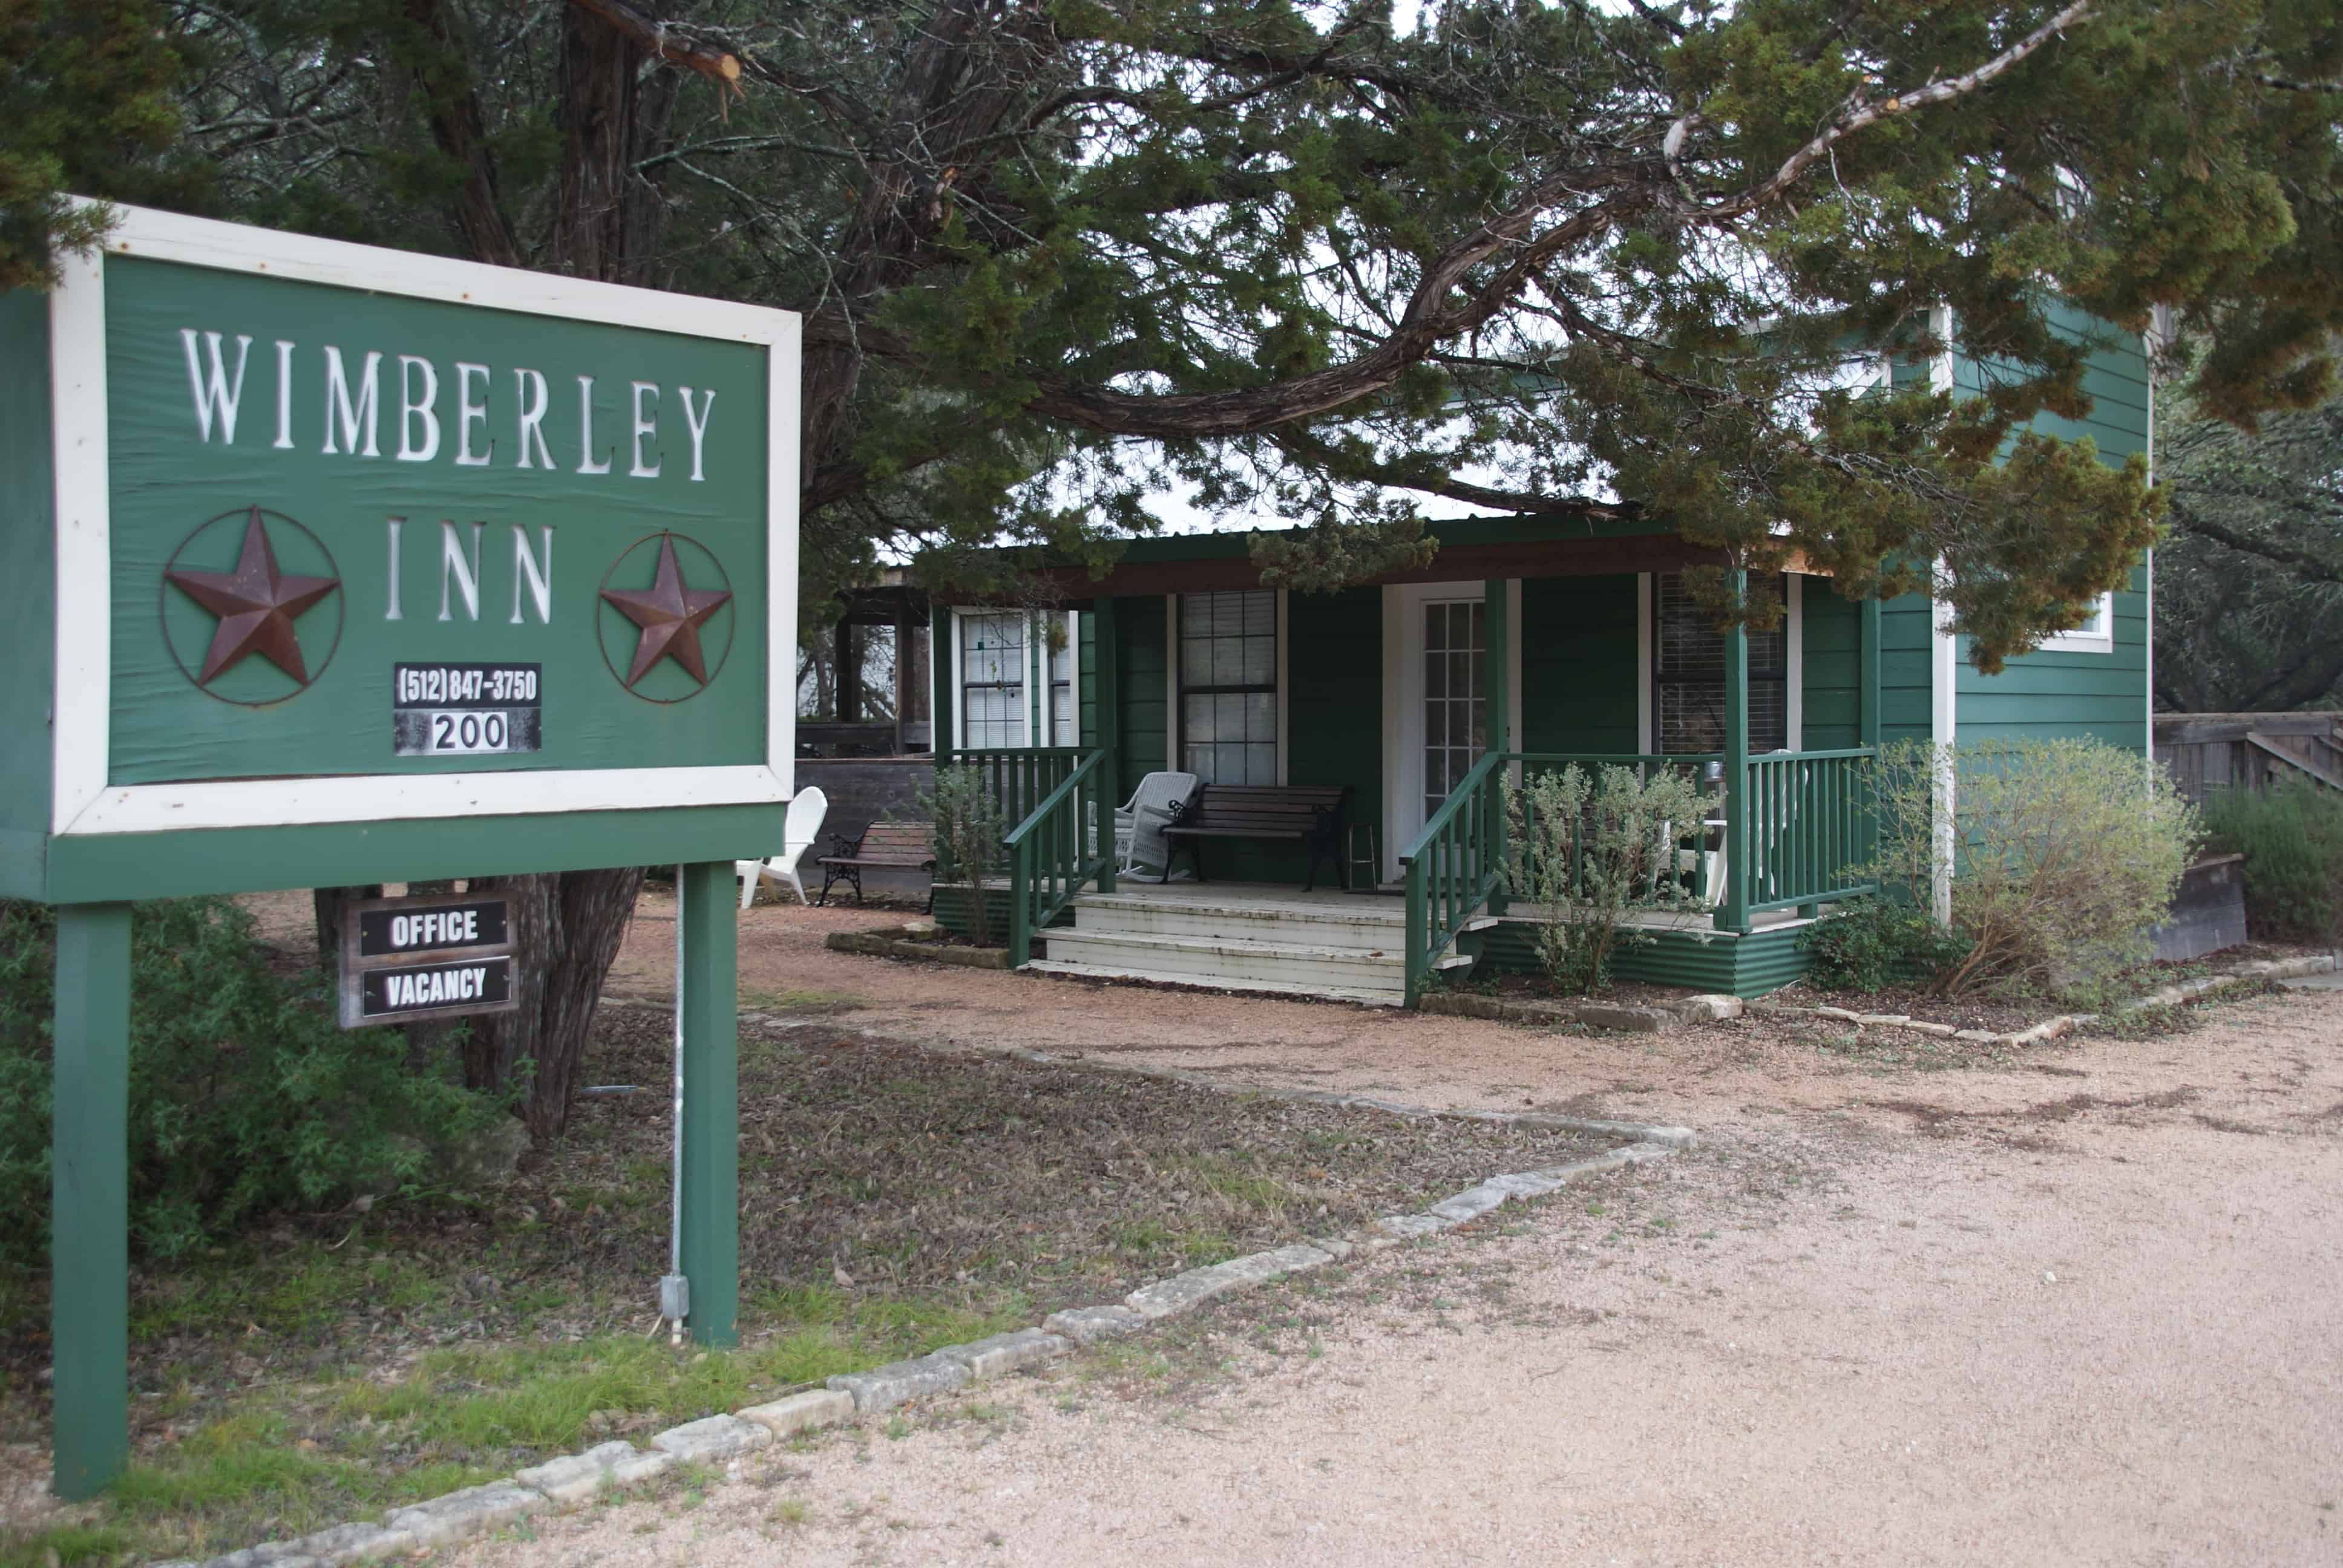 The Green House at the Wimberley Inn Texas